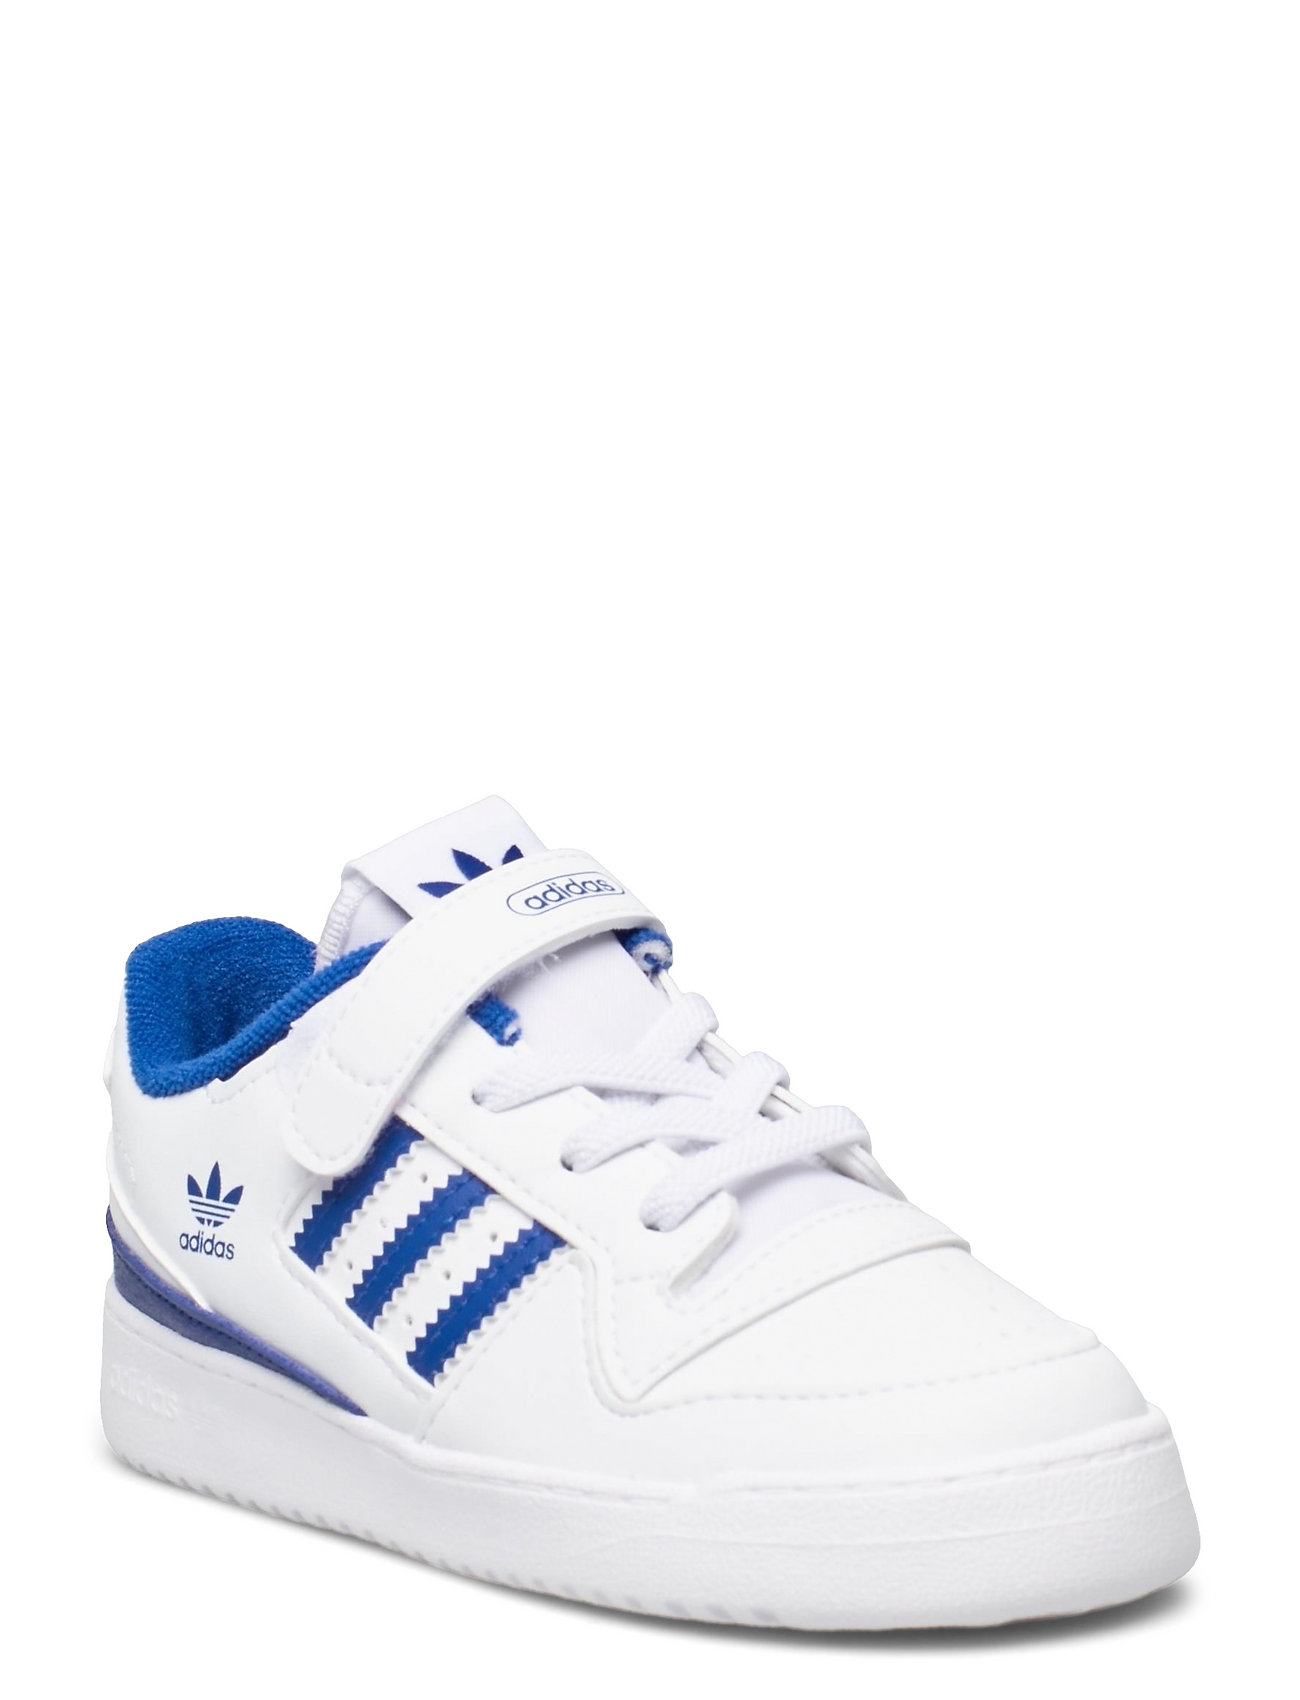 Forum Low I Low-top Sneakers White Adidas Originals